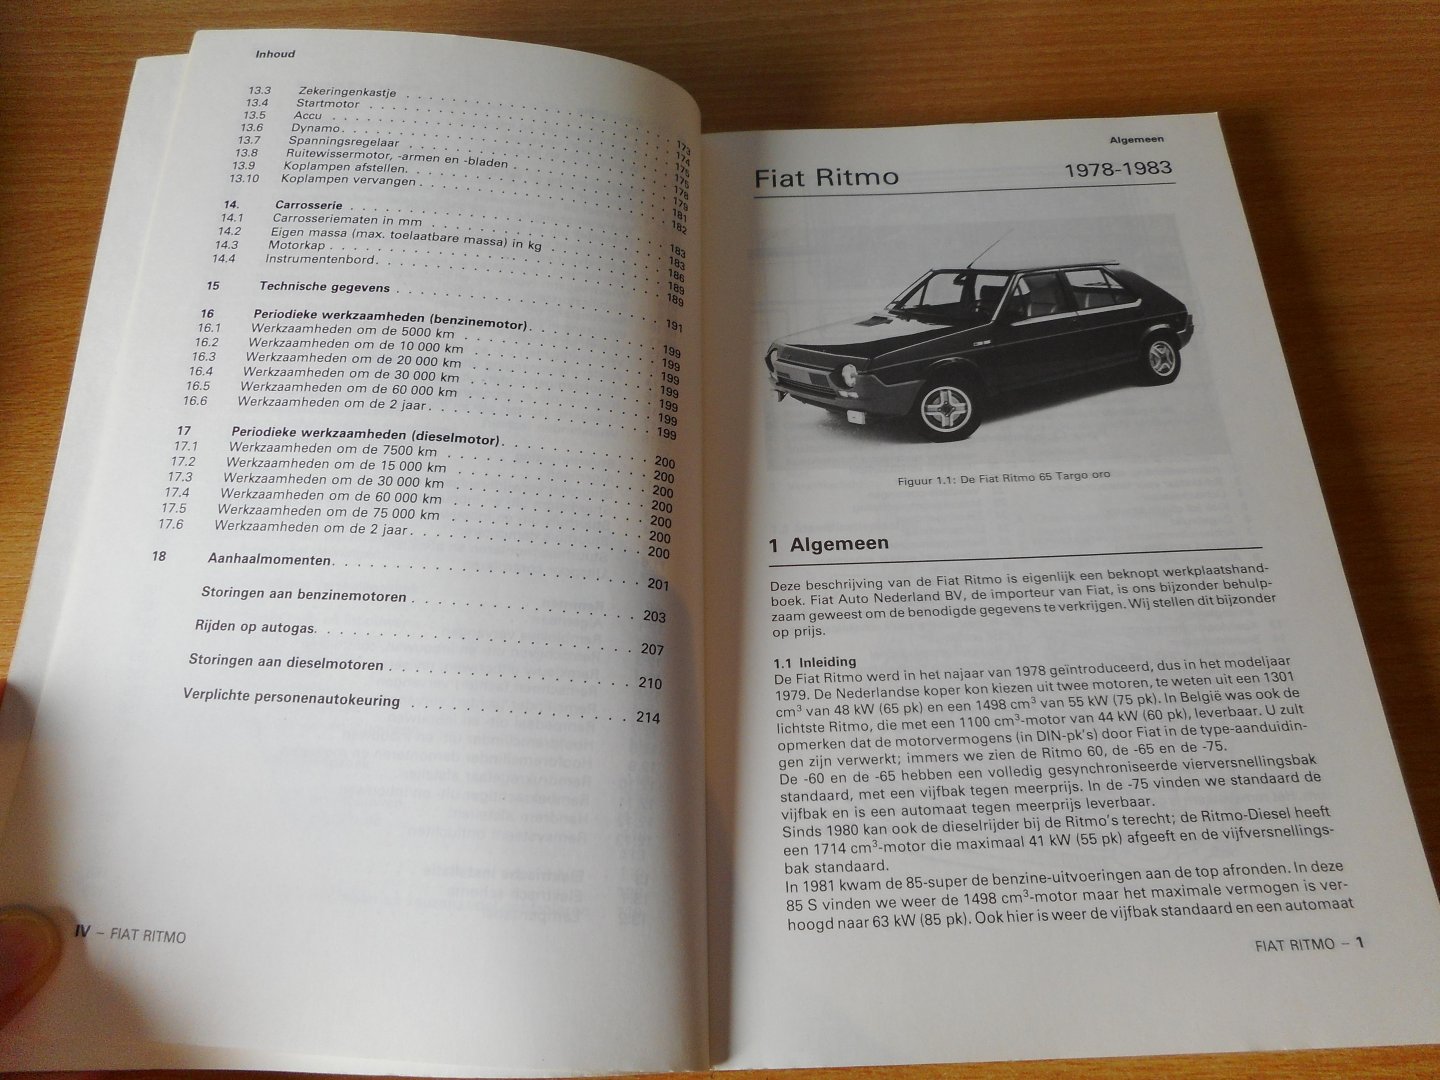 Olving, P.H - Vraagbaak Fiat Ritmo. Benzine- en dieselmodellen 1978-1983.